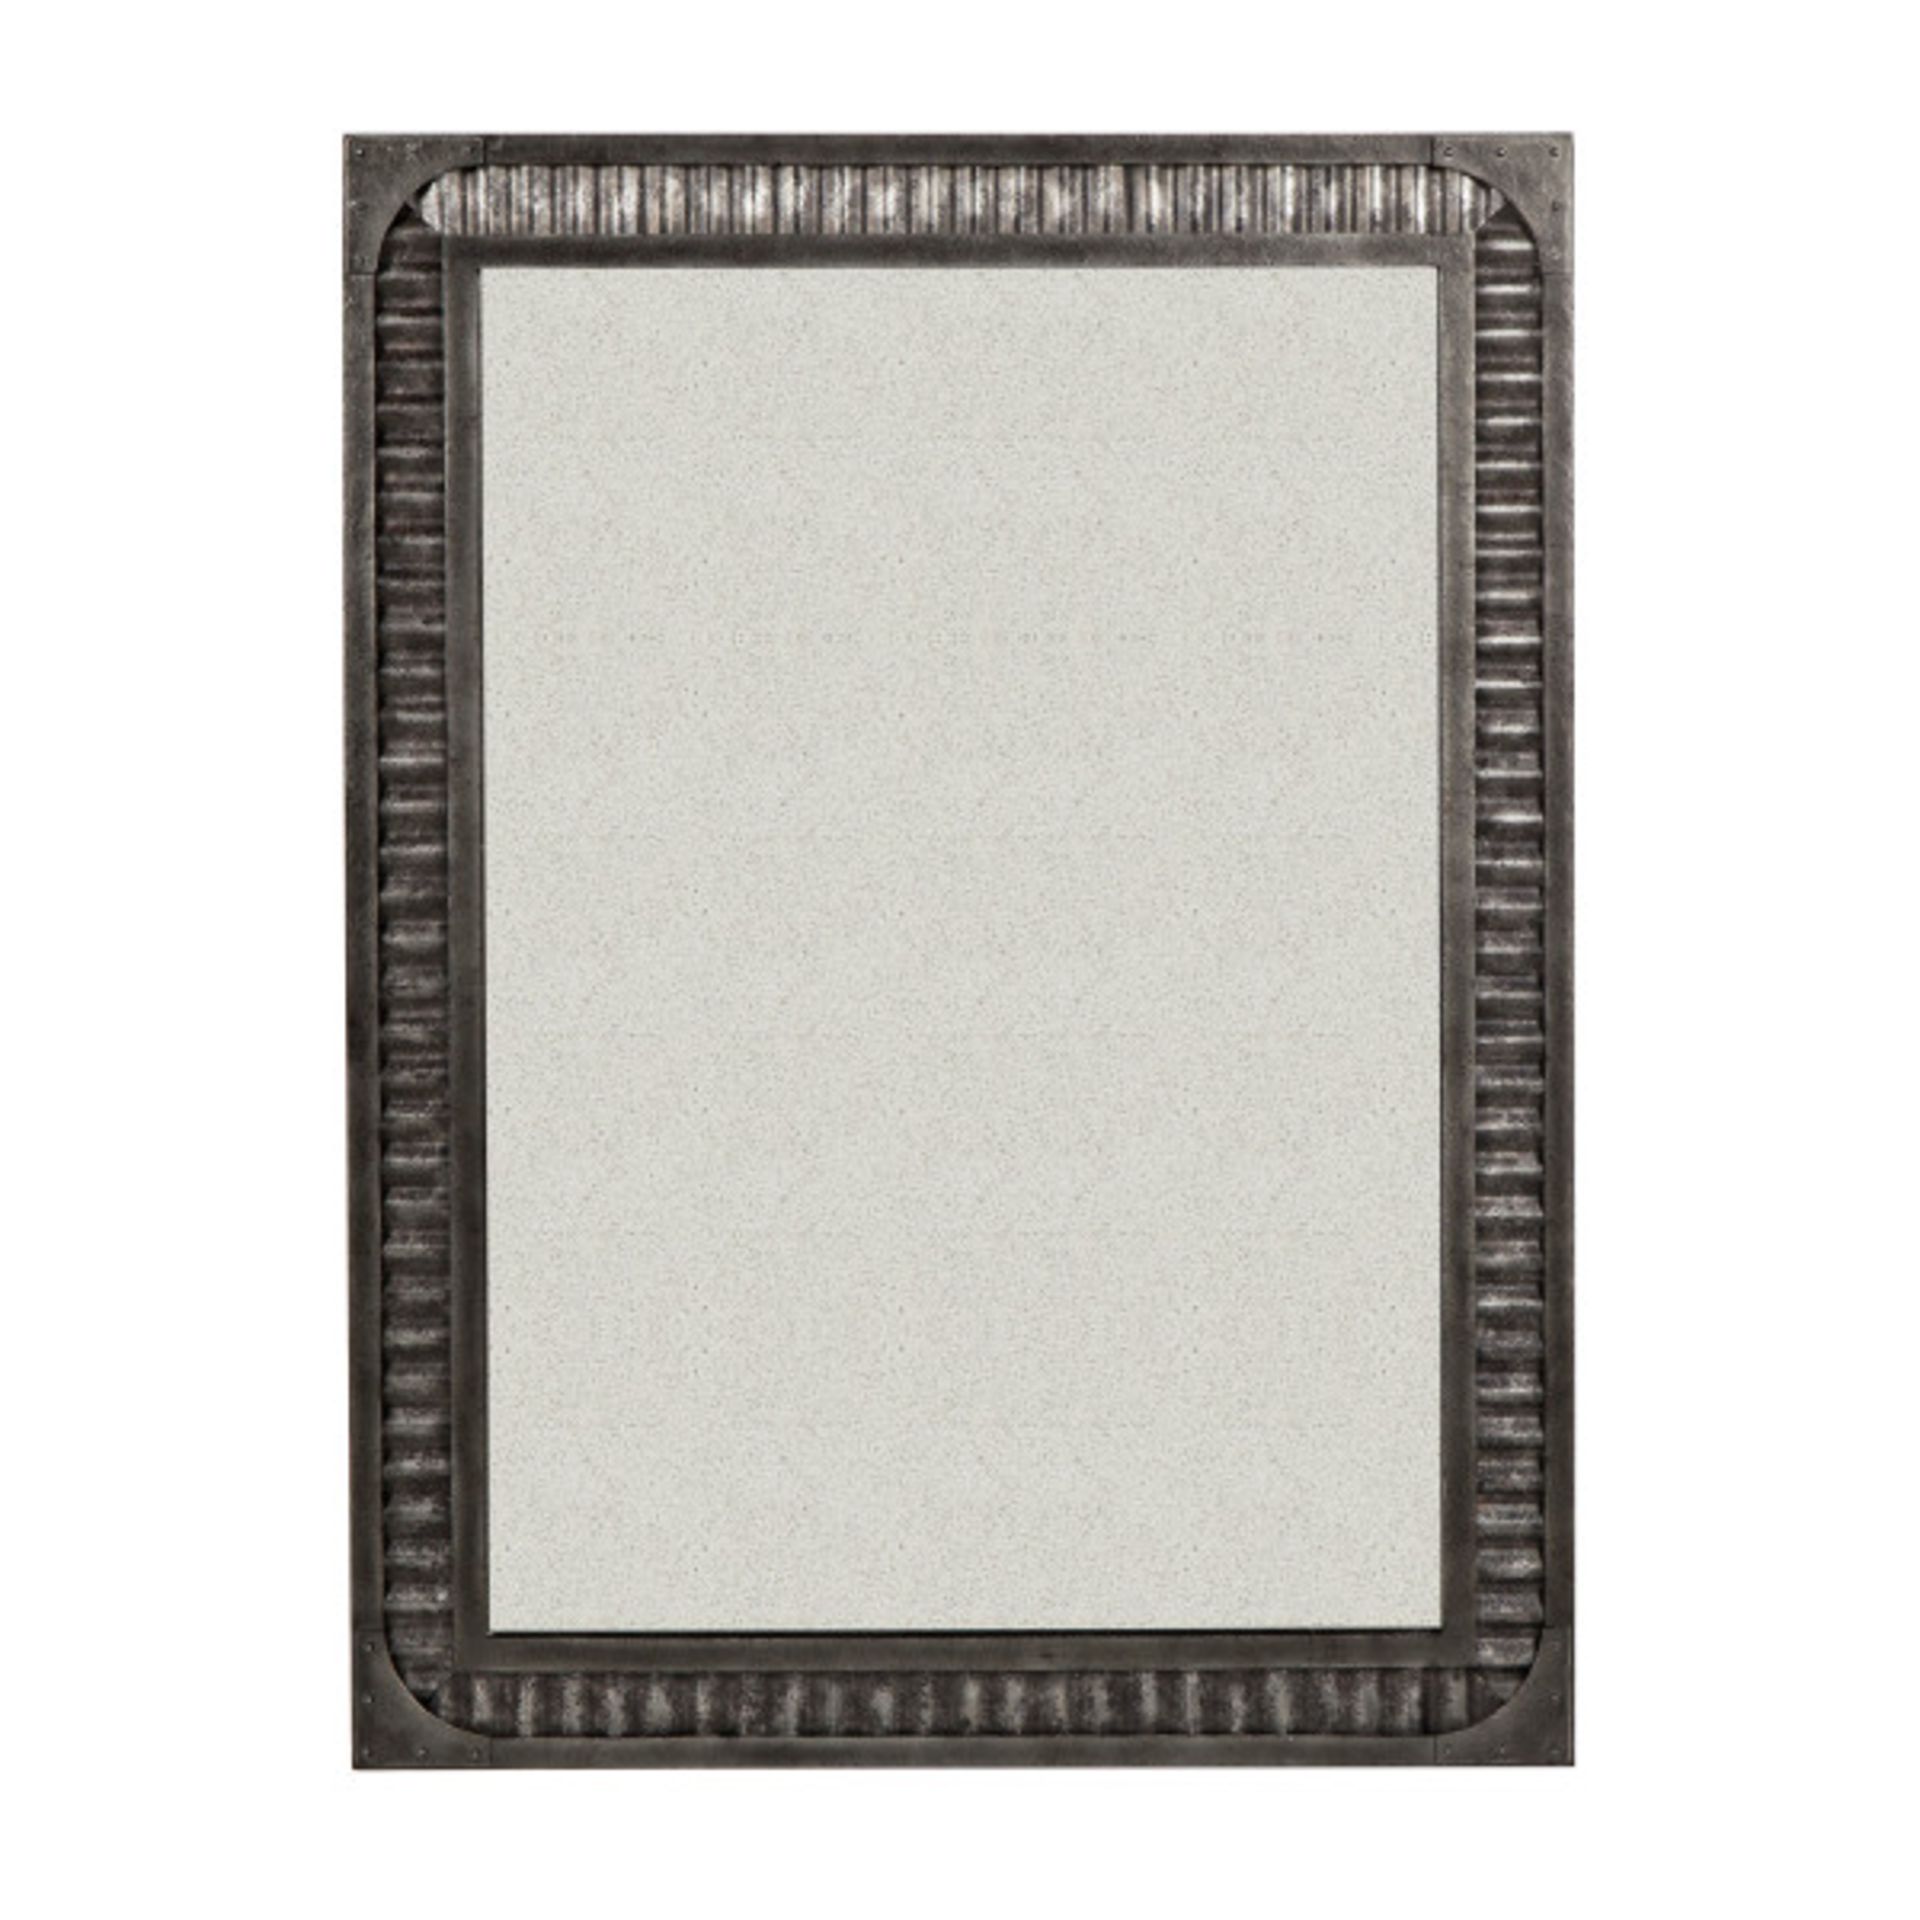 Beauhome Mirrors Jawa Mirror - Medium 91.4 x 3.8 x 121.9 CM Material: Iron Frame + corrugated - Image 2 of 2